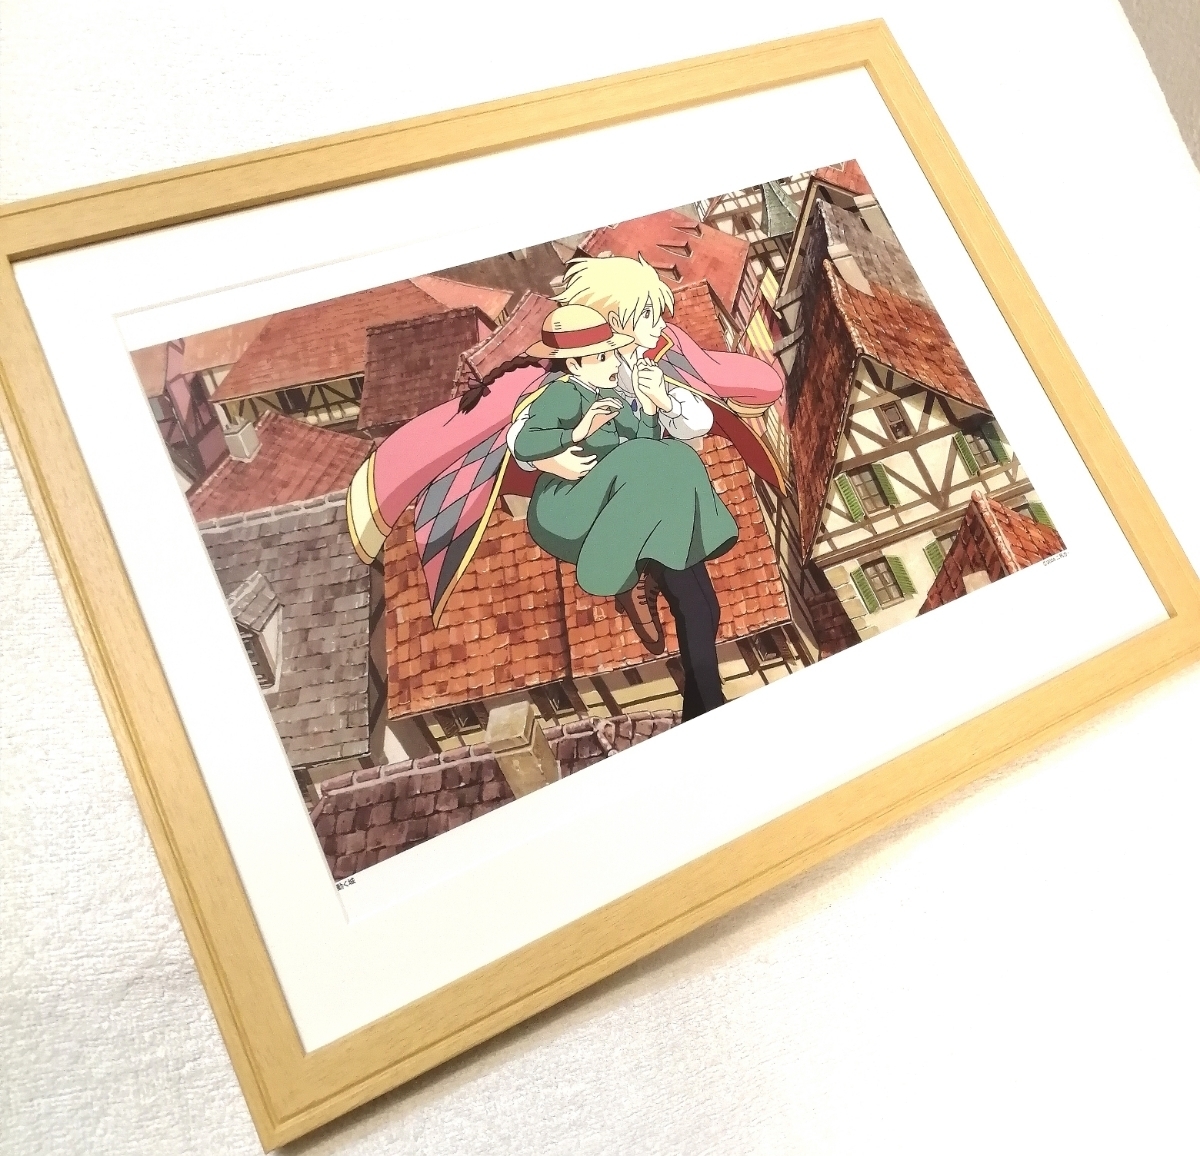 Super rare! Studio Ghibli Howl's Moving Castle [Framed Item] Ghibli Calendar Poster Wall Painting Postcard Reproduction Original Art Hayao Miyazaki b, comics, anime goods, others